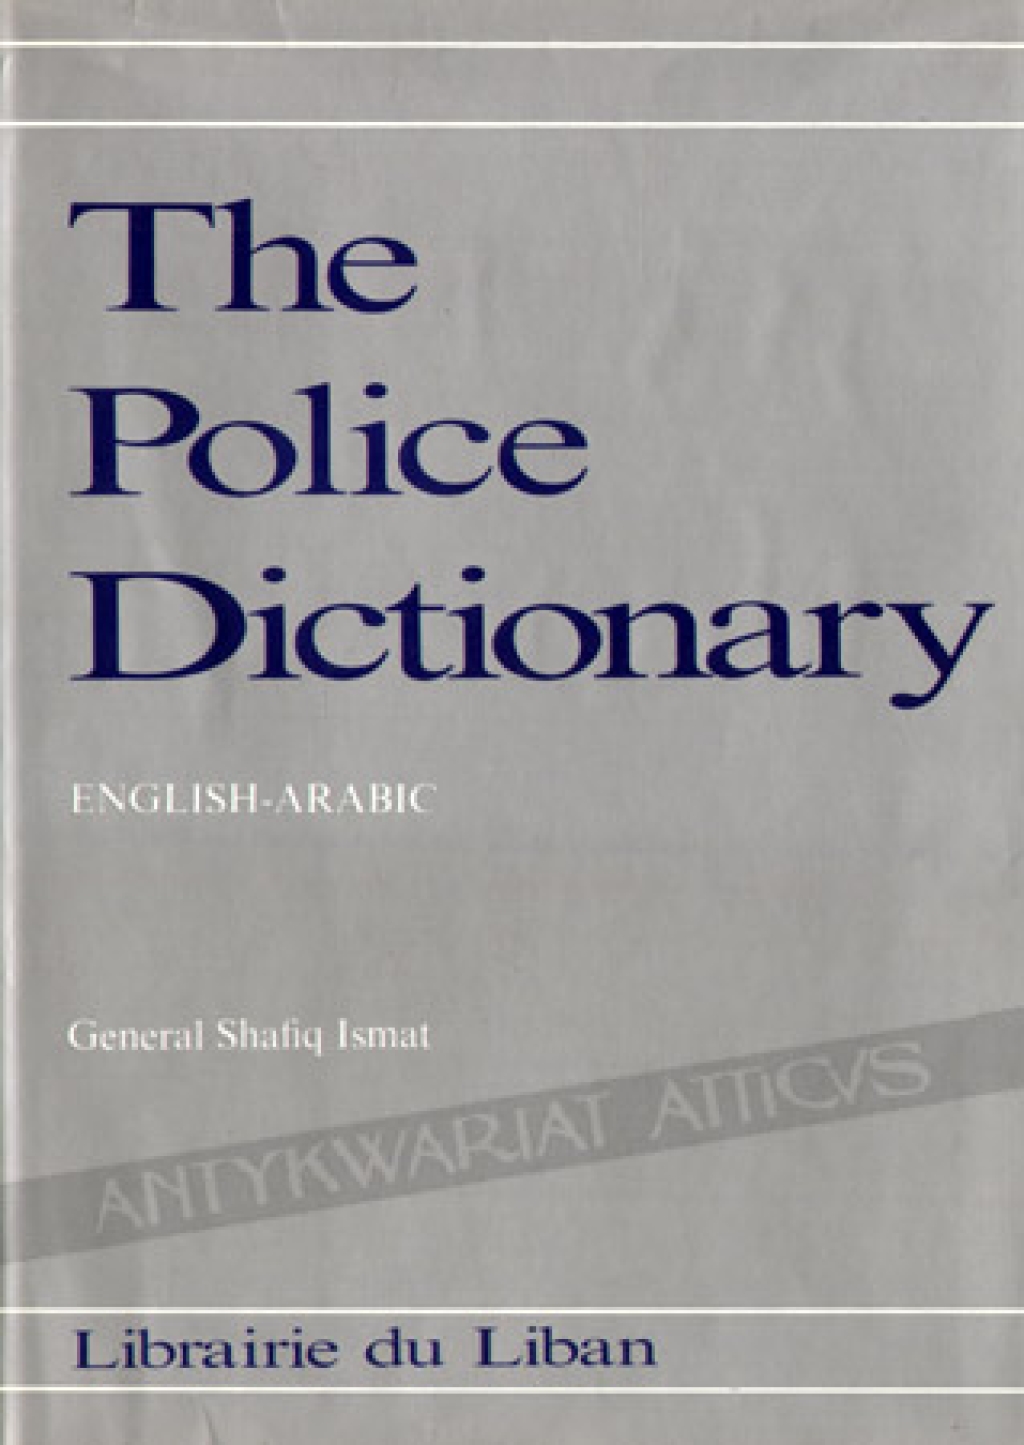 The Police Dictionary. English-Arabic